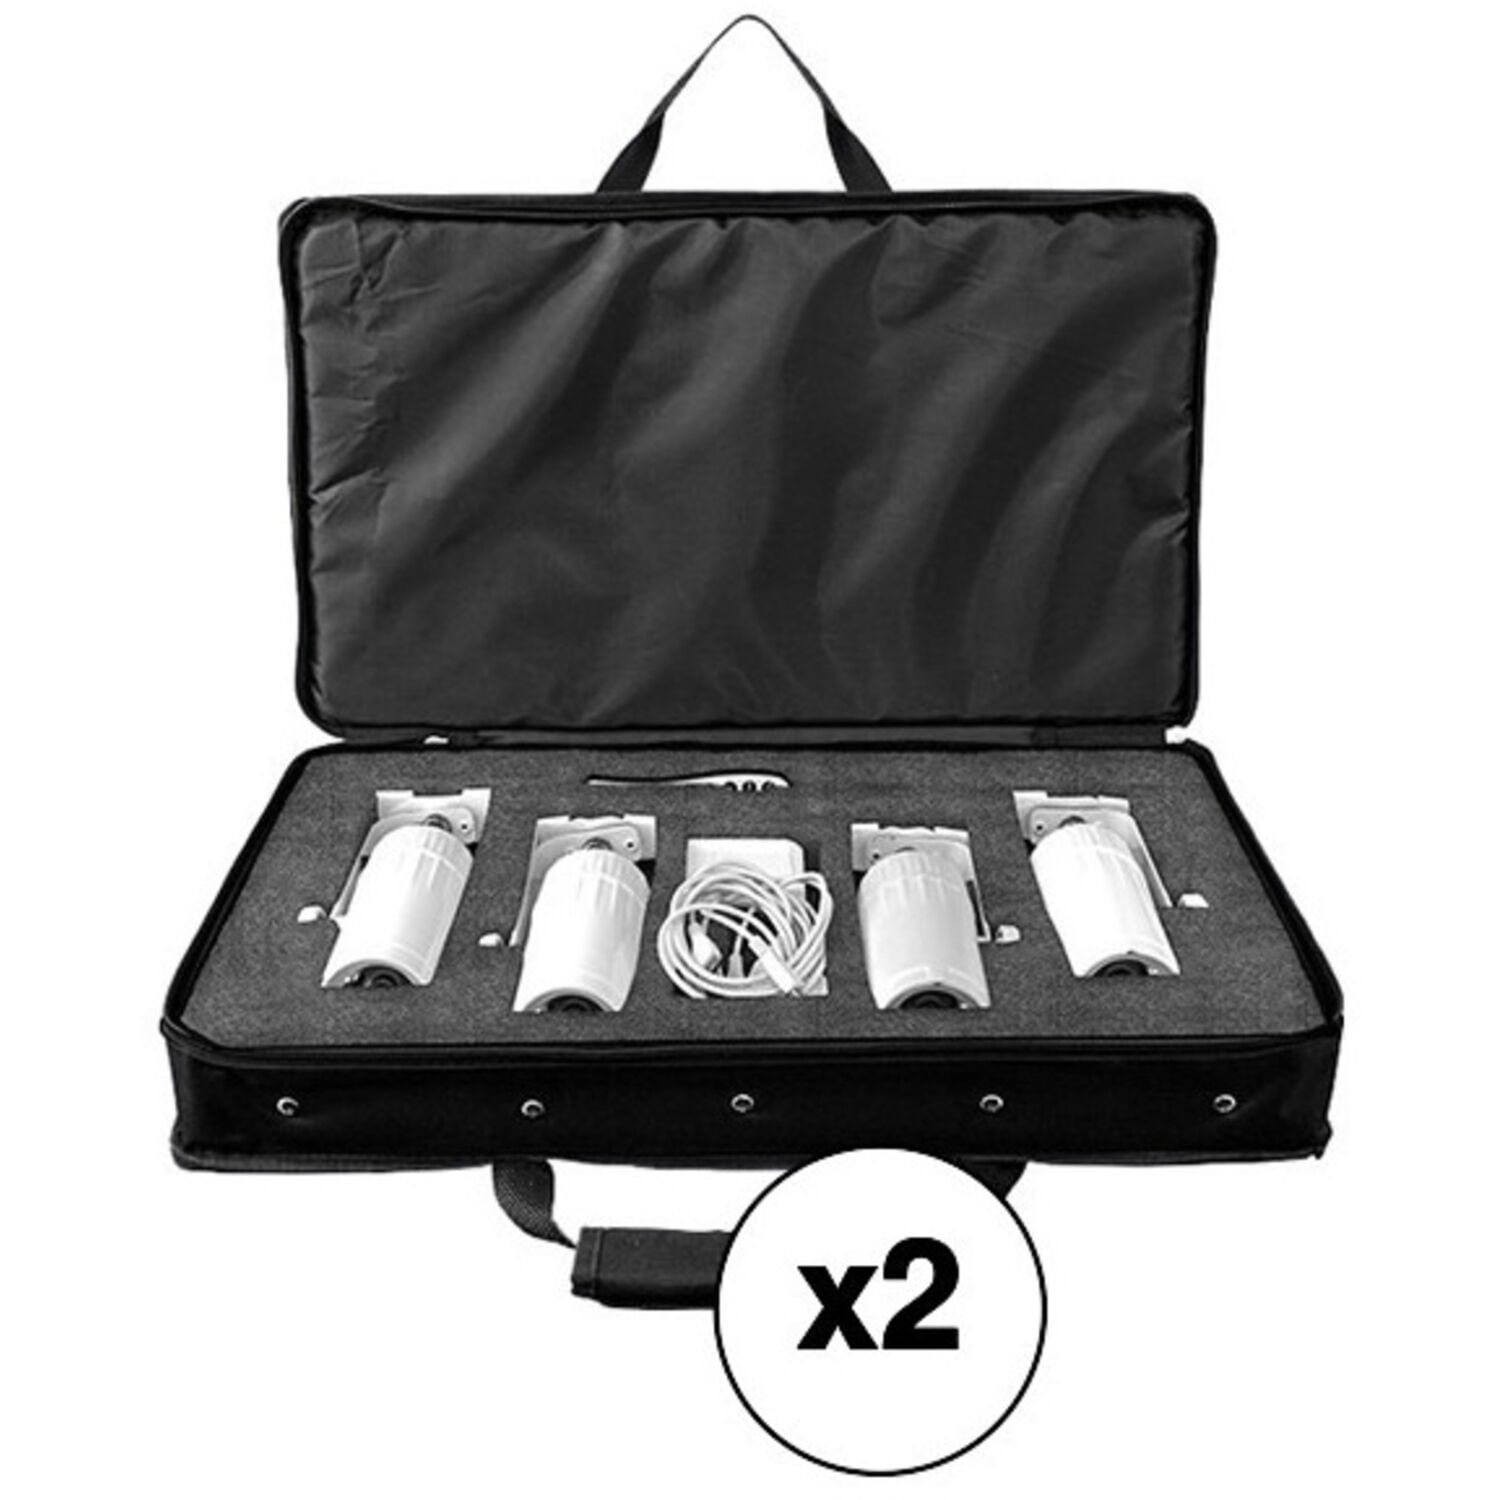 Focos Led Chauvet Dj Ezpin Battery Powered 2 X 4 Pack